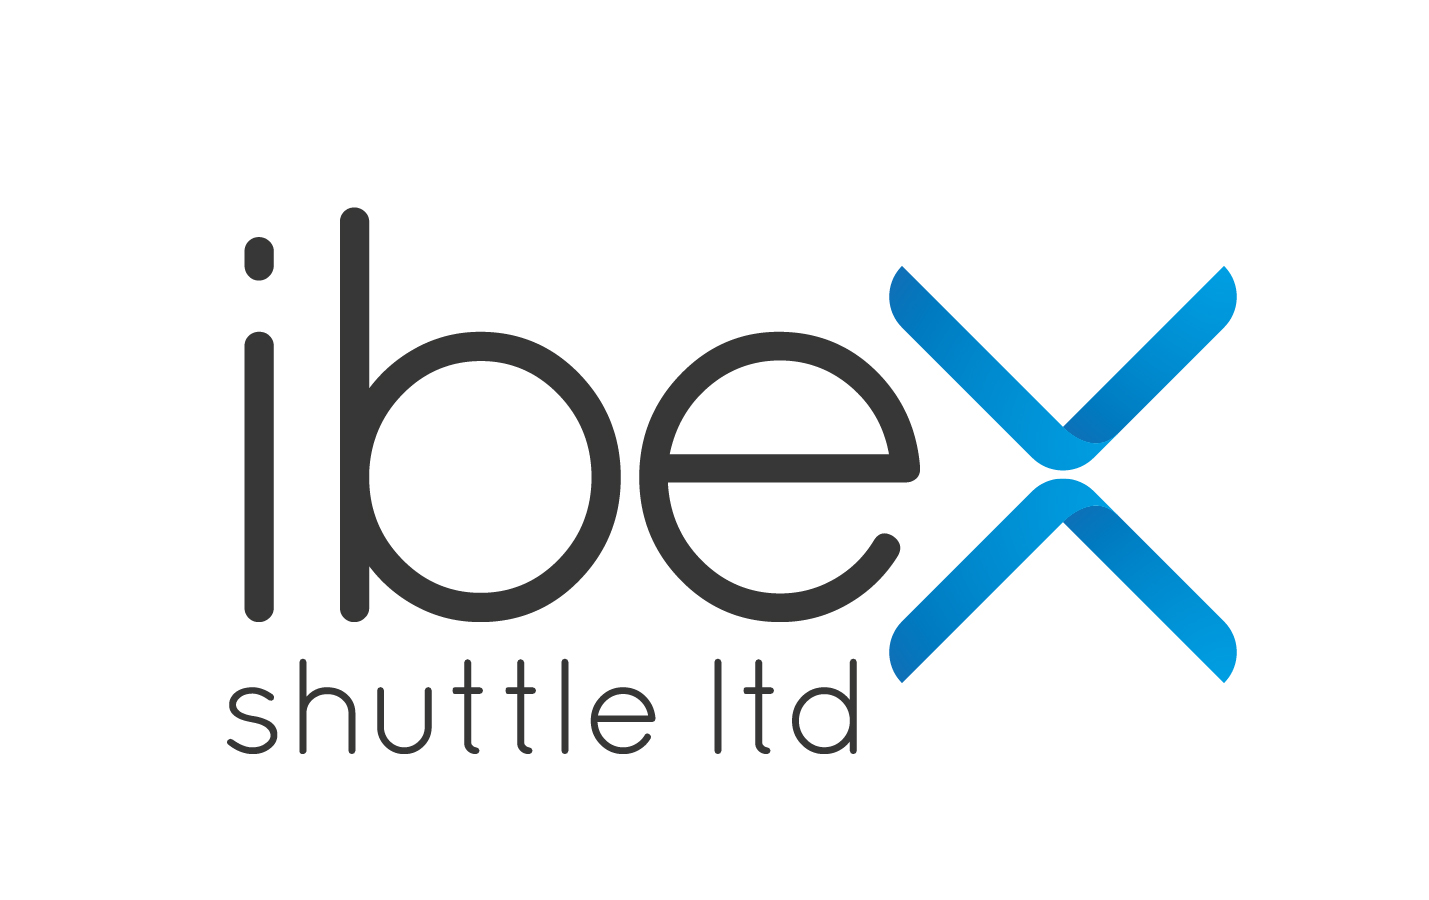 Ibex Shuttle Ltd